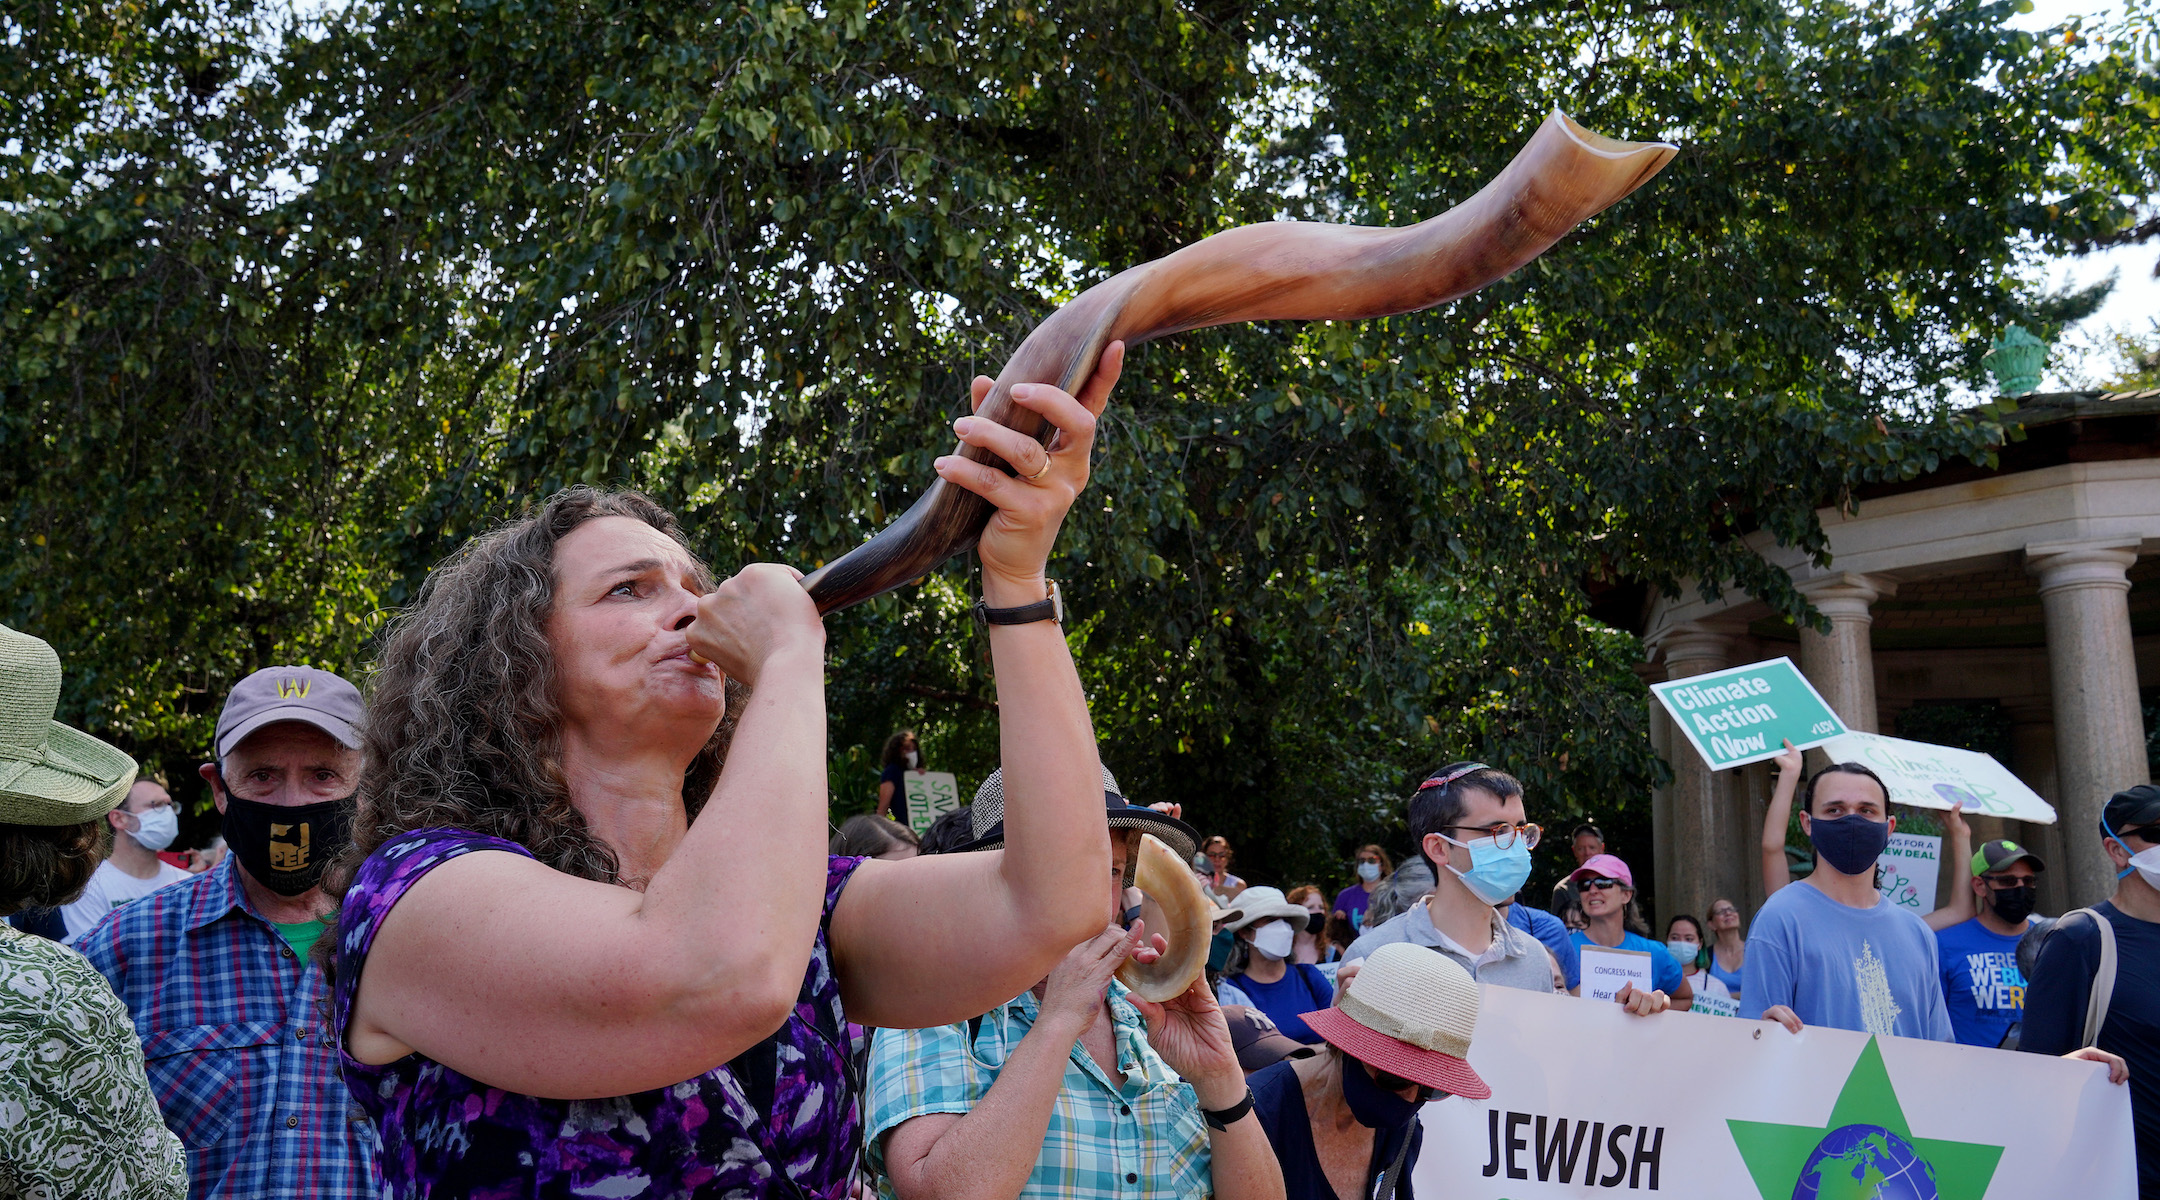 Rabbi Jennie Rosenn blows the shofar at the “Jewish Climate Action, Hear The Call Senator Schumer” event in New York City on September 12, 2021. (Jemal Countess / Getty, courtesy of Dayenu)